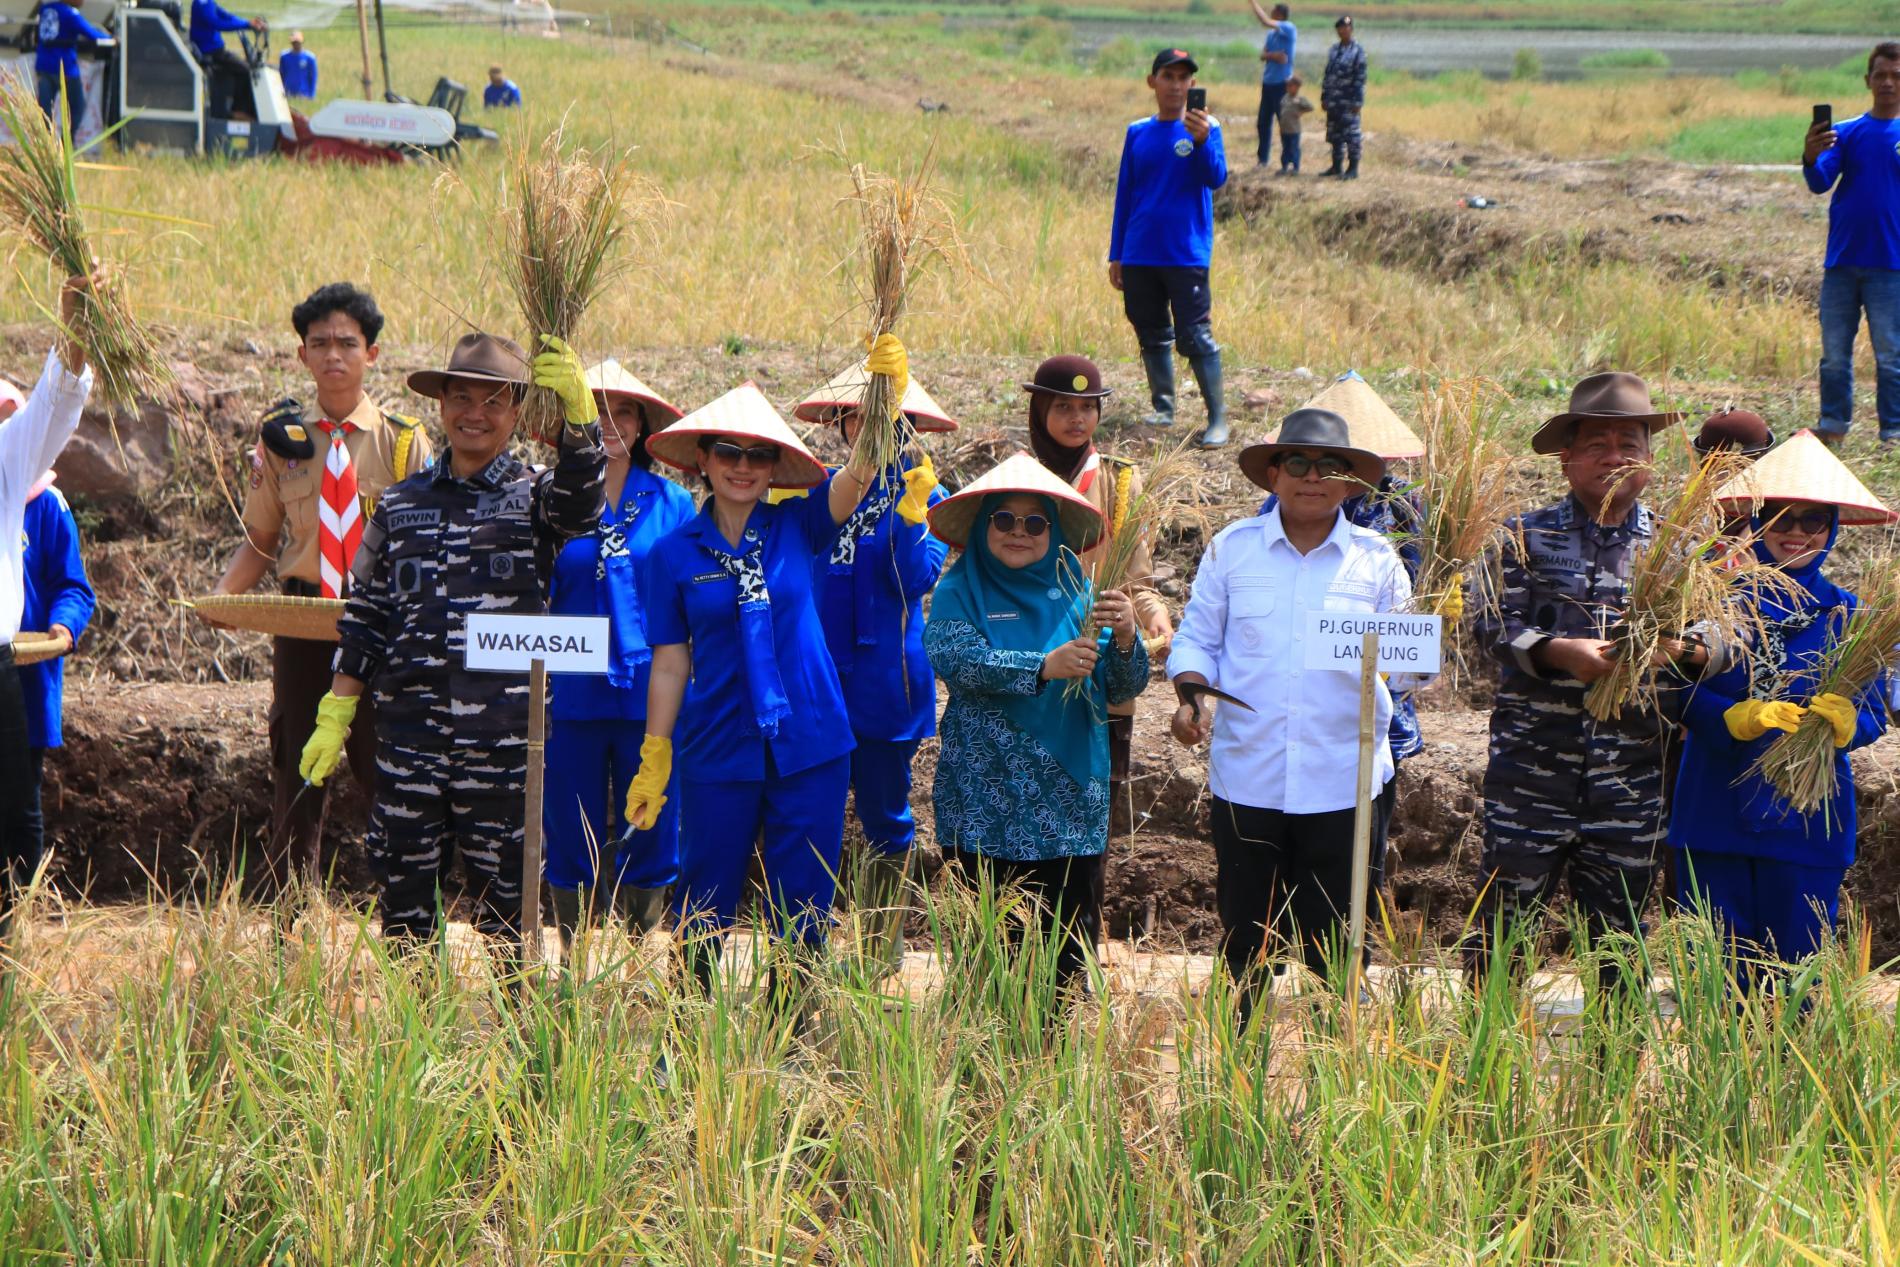 Pj. Gubernur Lampung Dampingi Menteri Pertanian RI Beserta Wakasal Pada Gebyar Panen Raya Padi dan Jagung Hibrida di Pesawaran